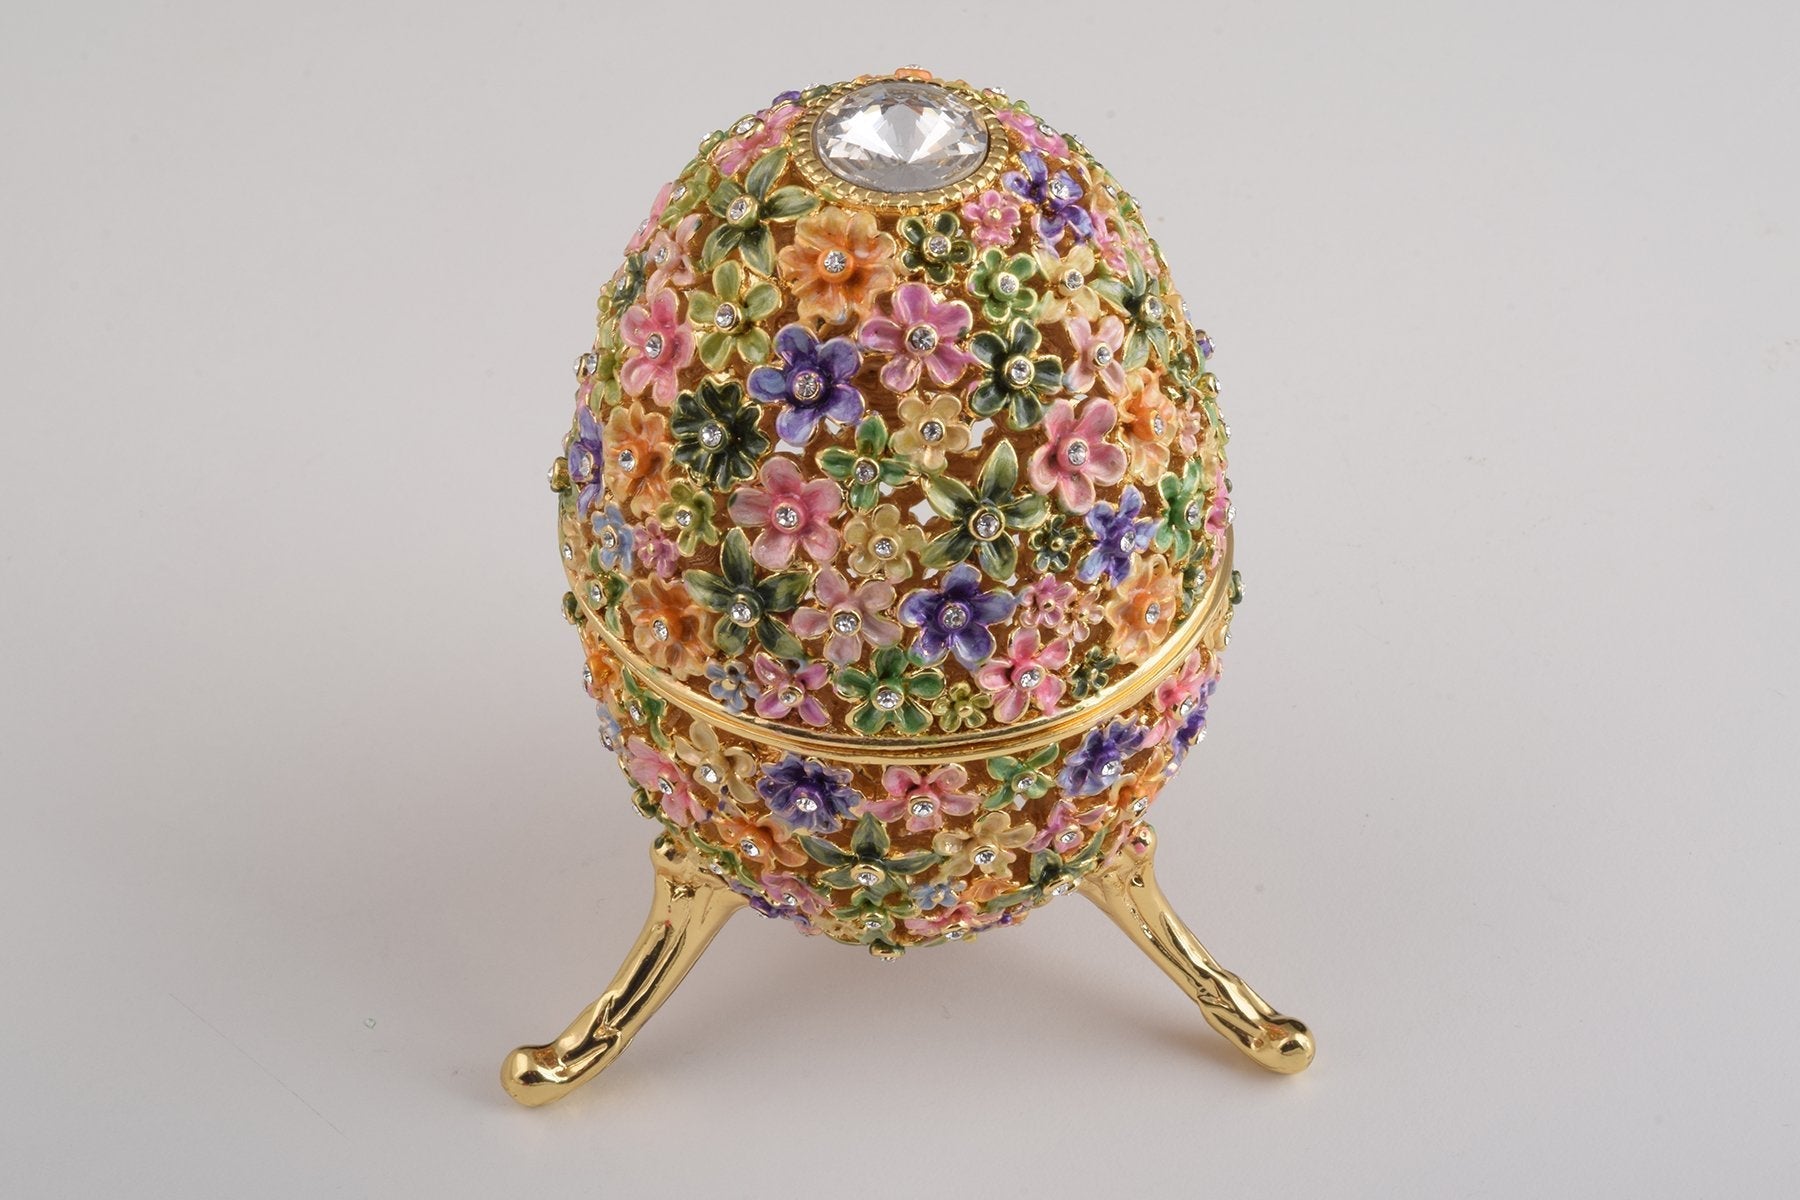 Keren Kopal Gold with Colorful Flowers Easter Egg trinket box 119.00